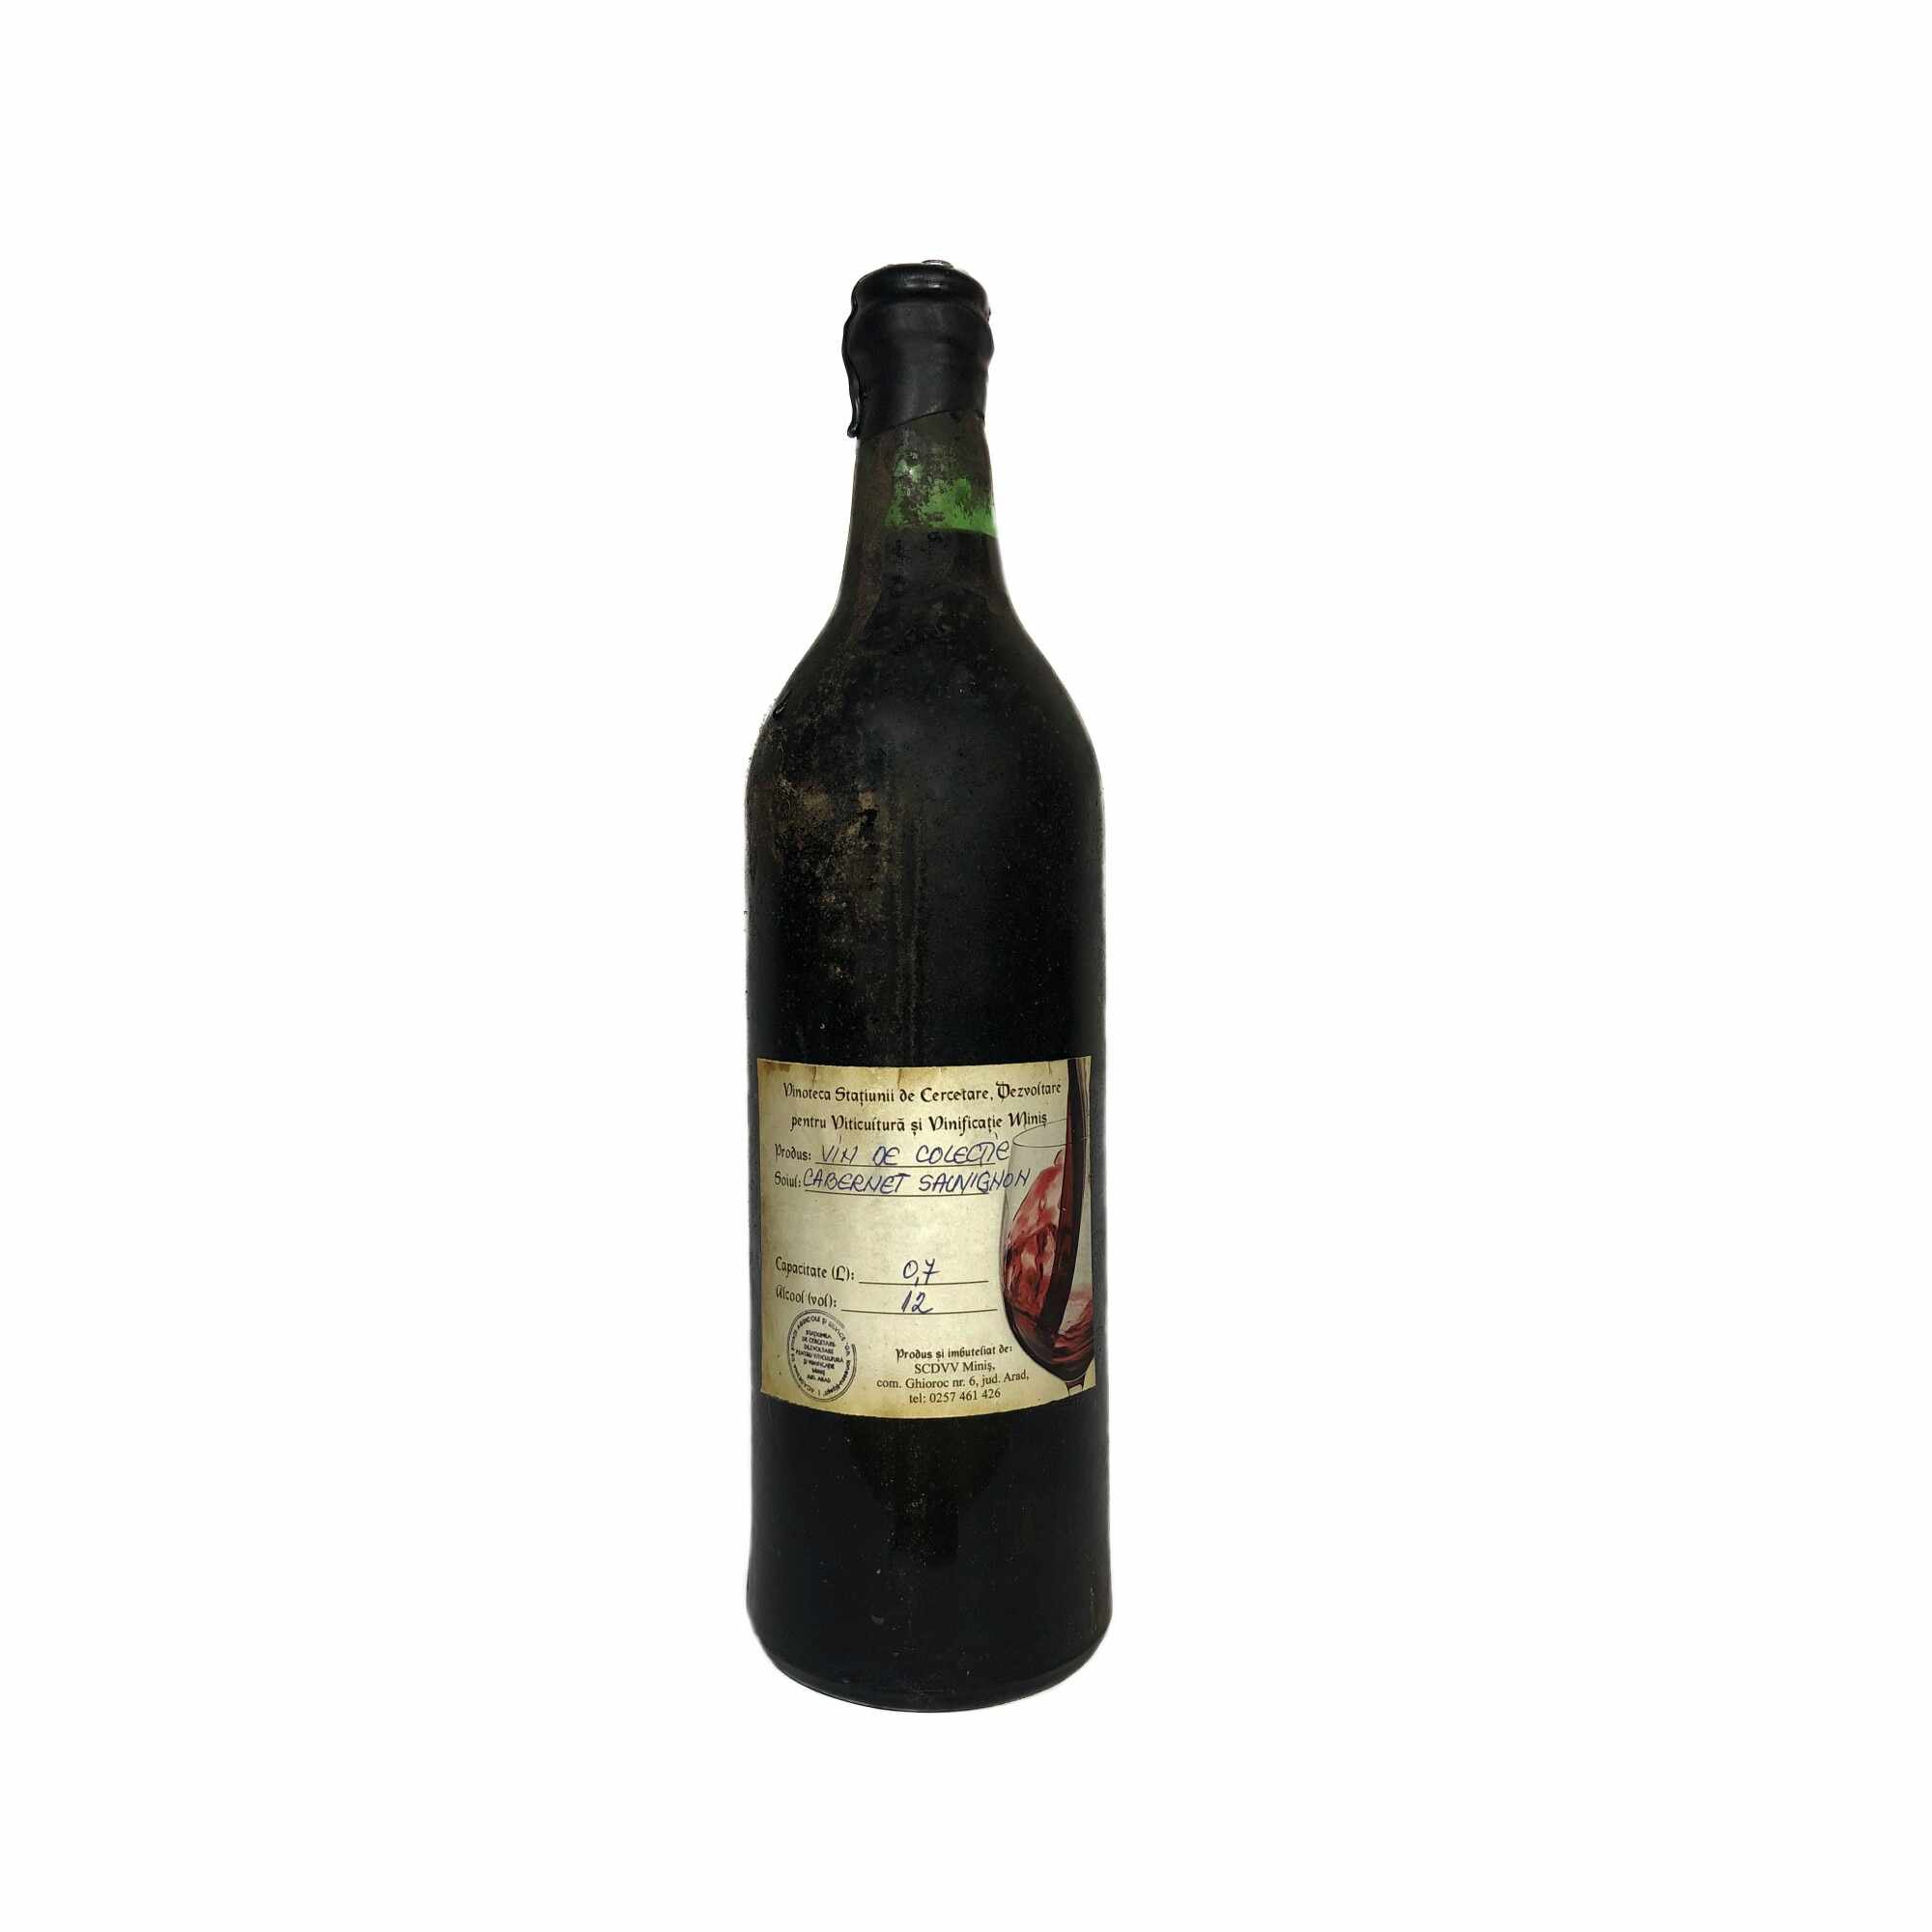 Vin rosu de colectie Cabernet Sauvignon - Anul 1980 in cutie de lemn, 700 ml